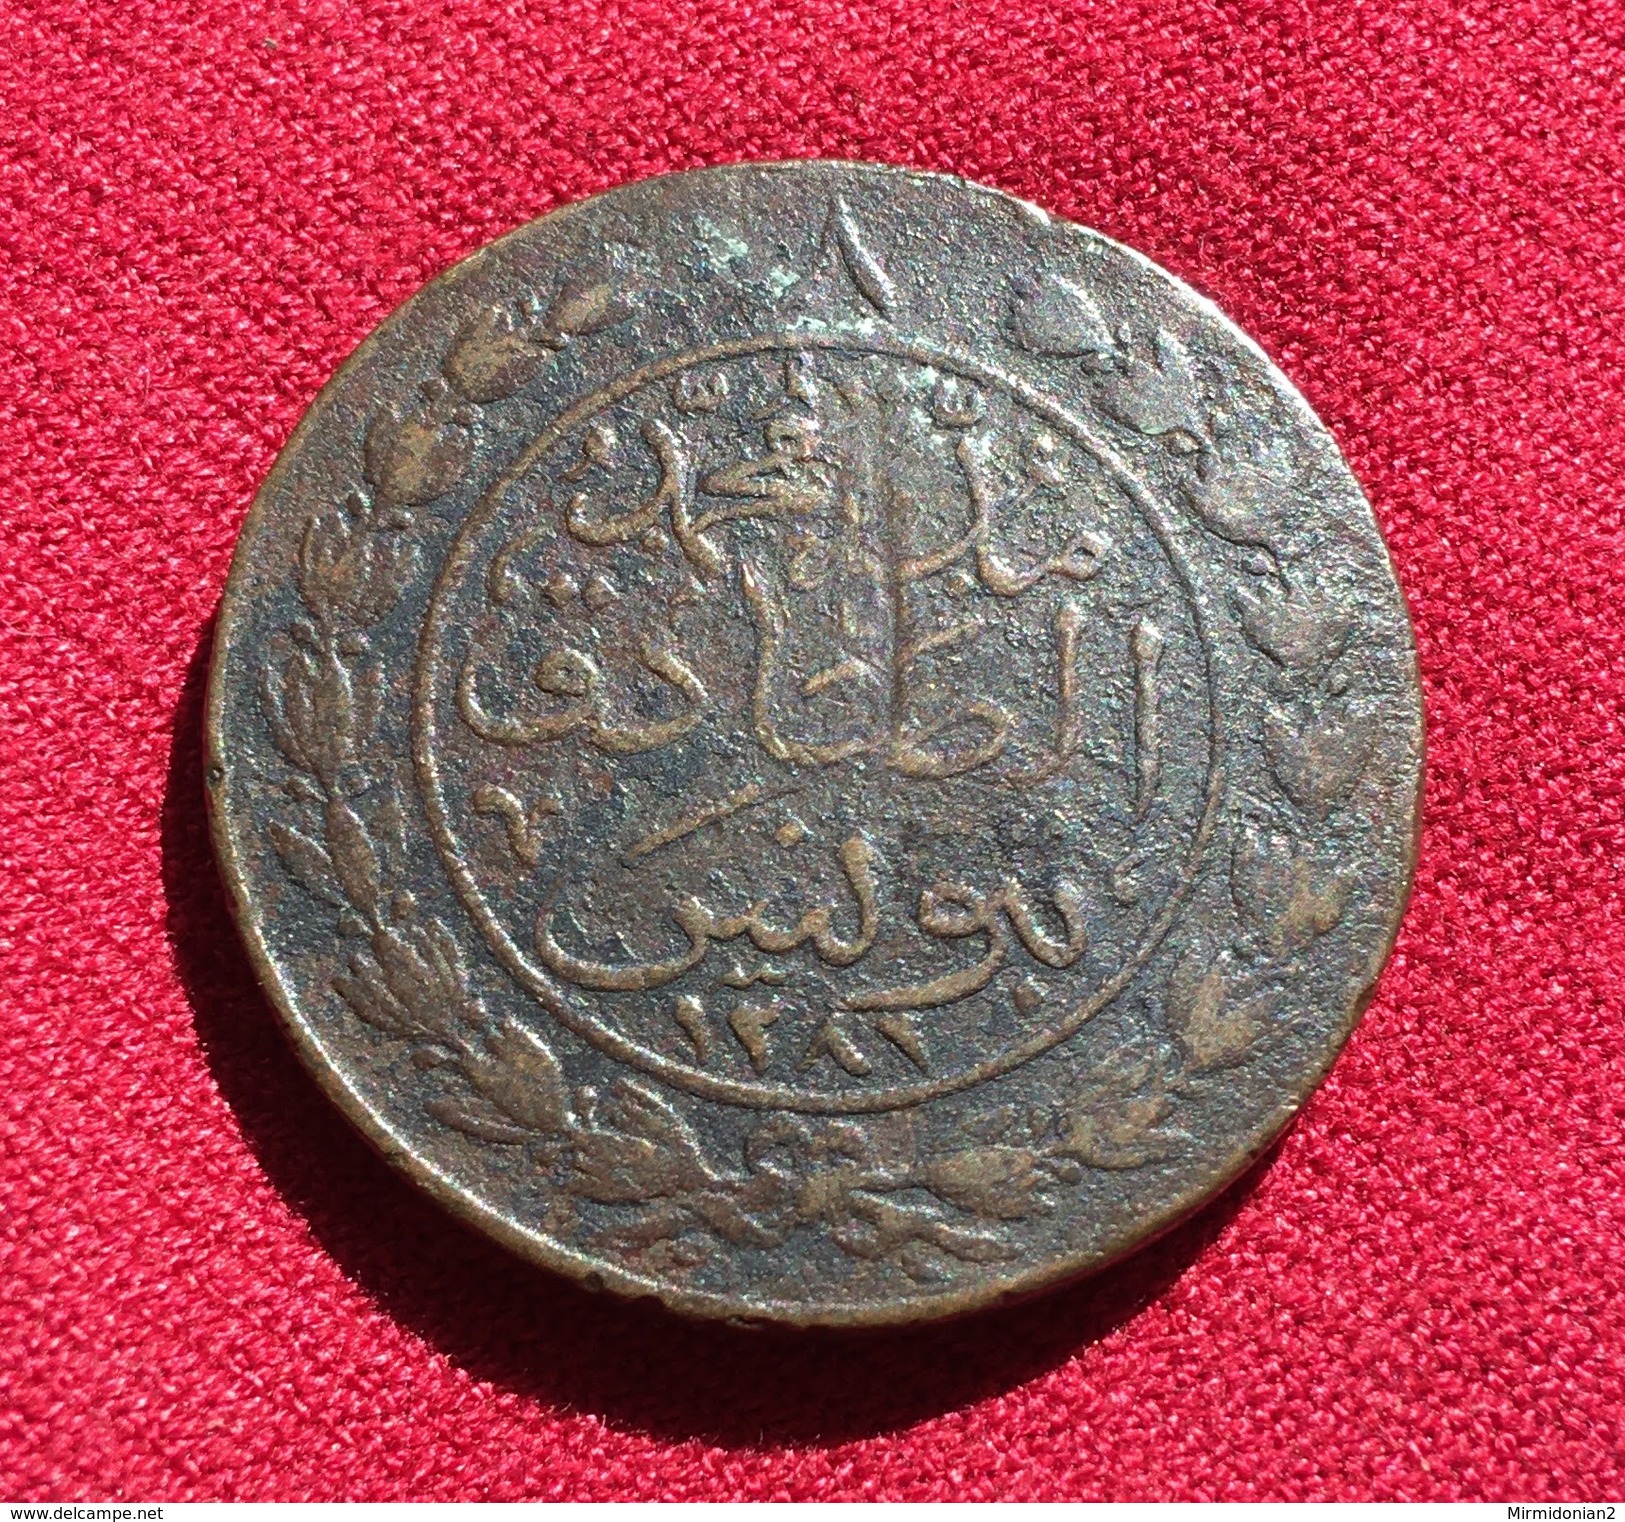 MOROCCO BIG BRONZE COIN 1299, BRONZE, 29.10 Gr. (145) - Marocco